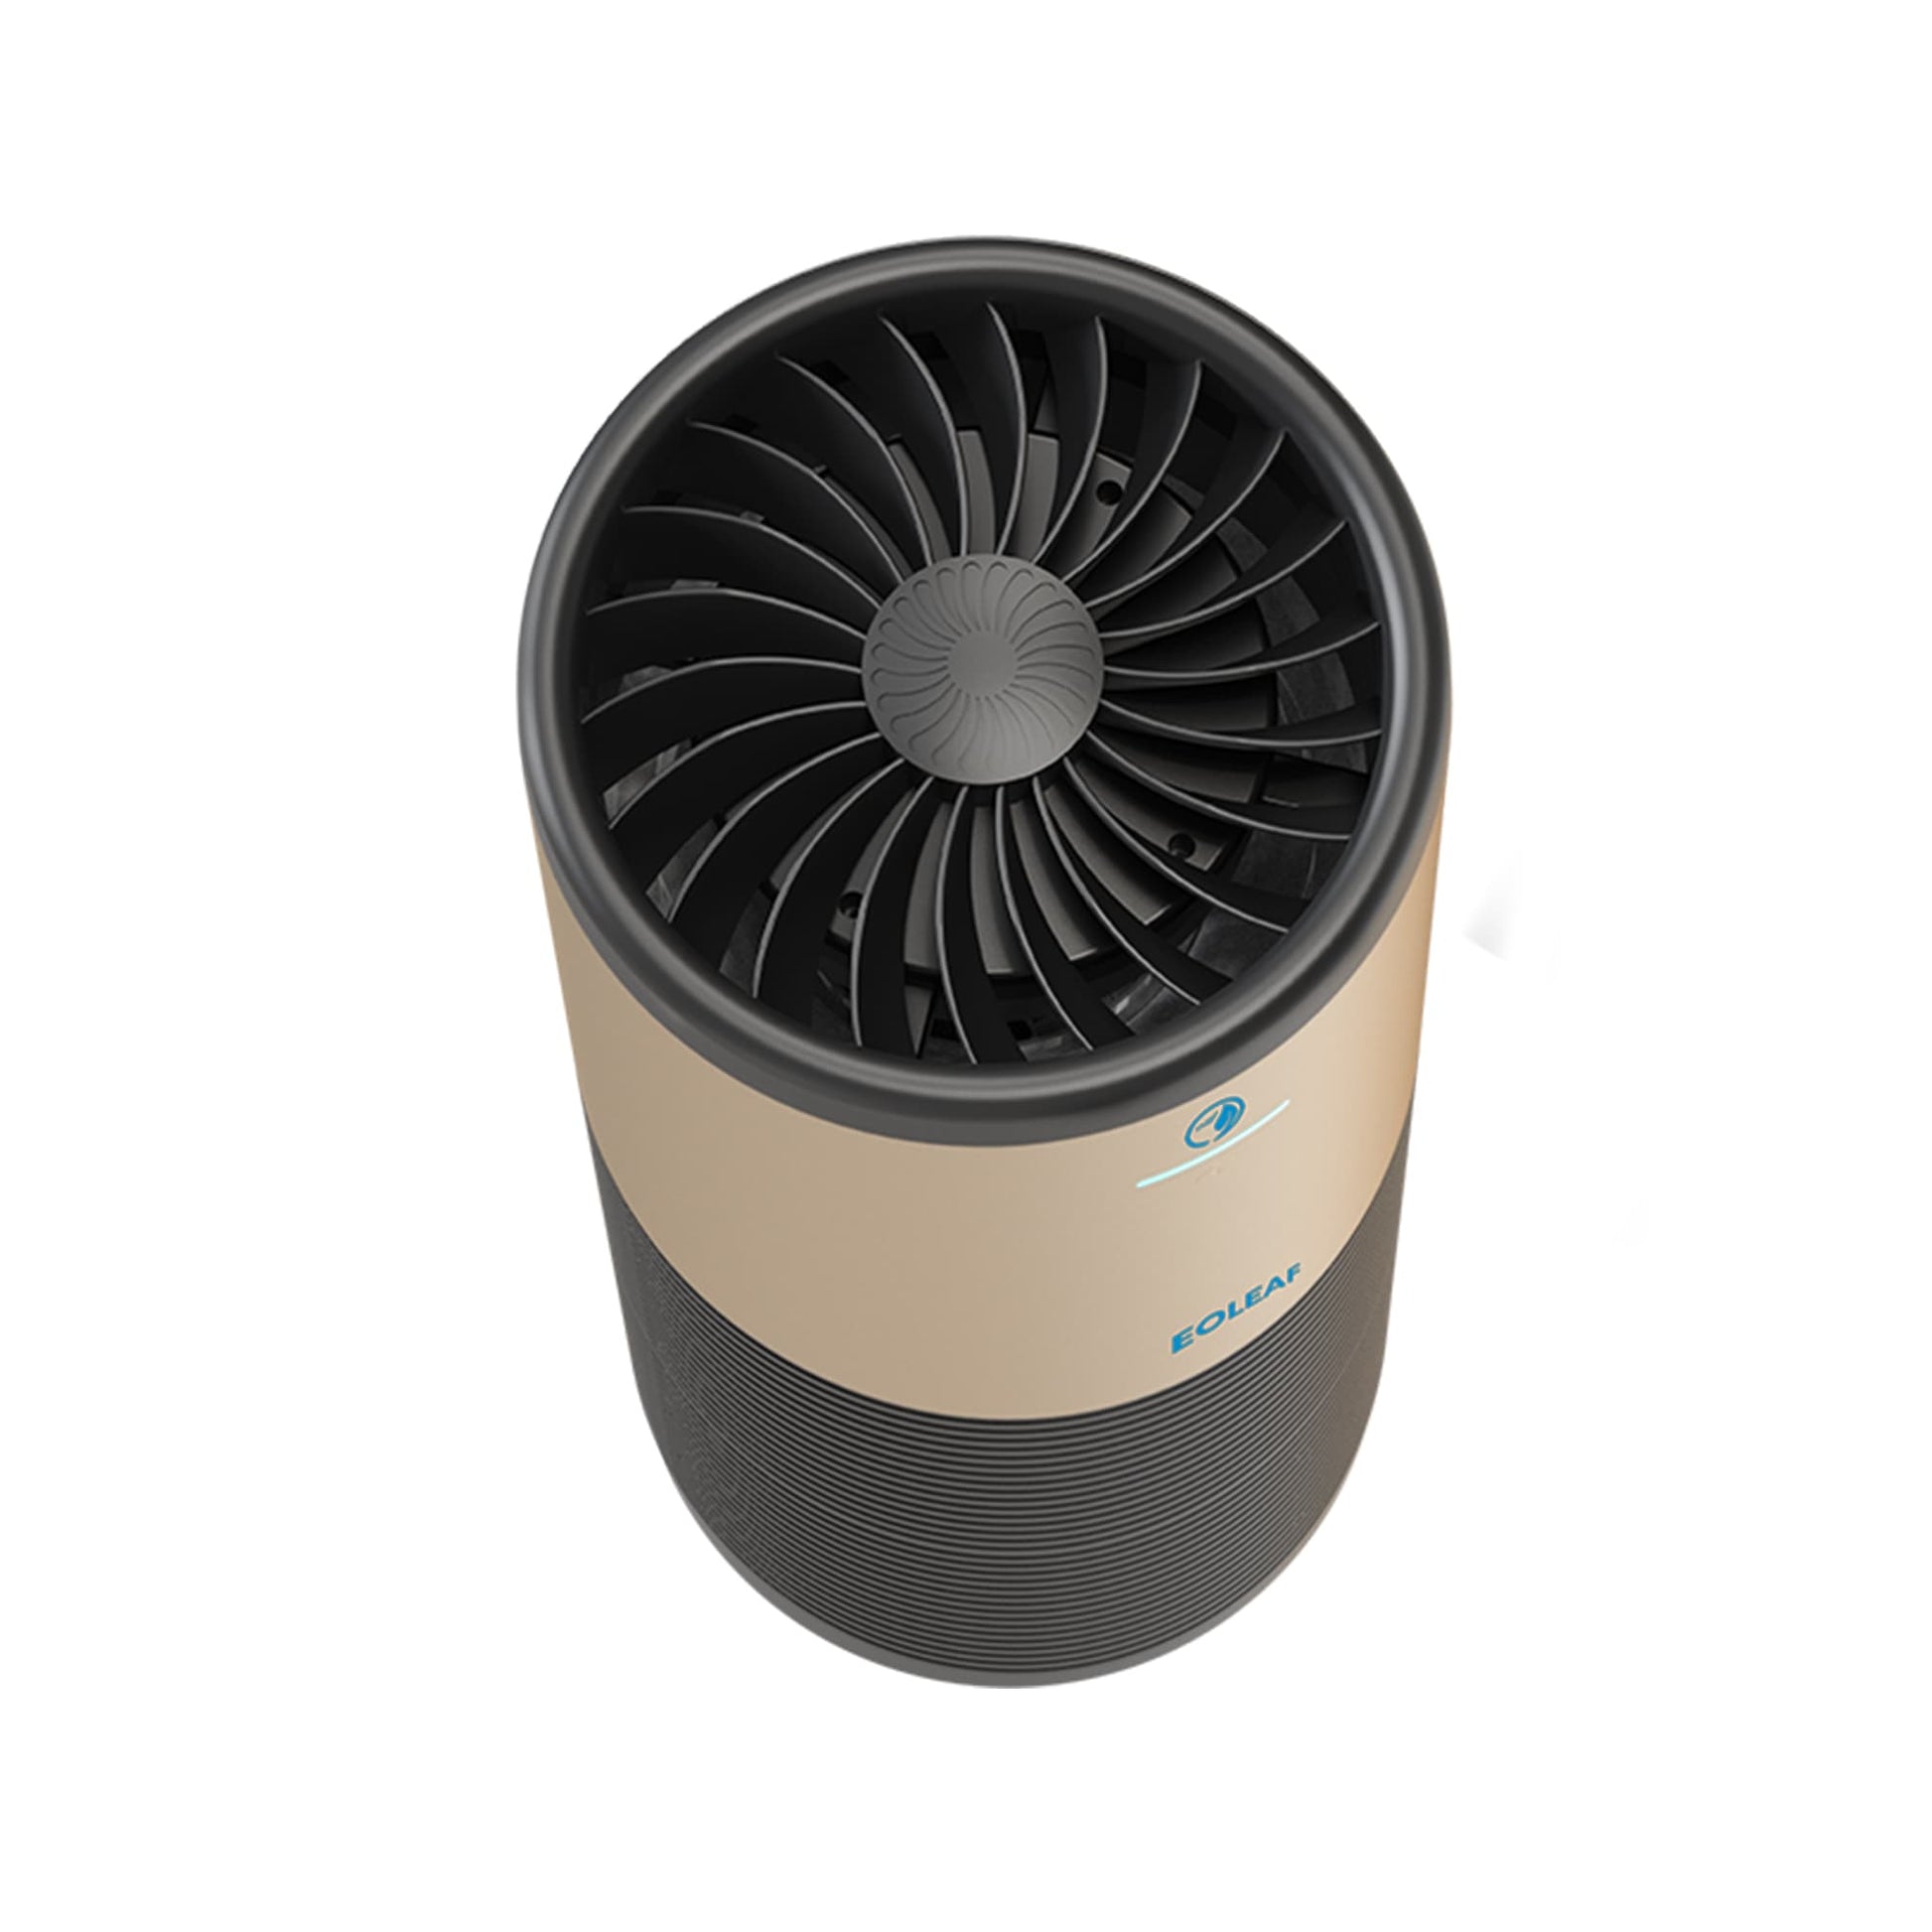 AEROPRO 150 air purifier - top view